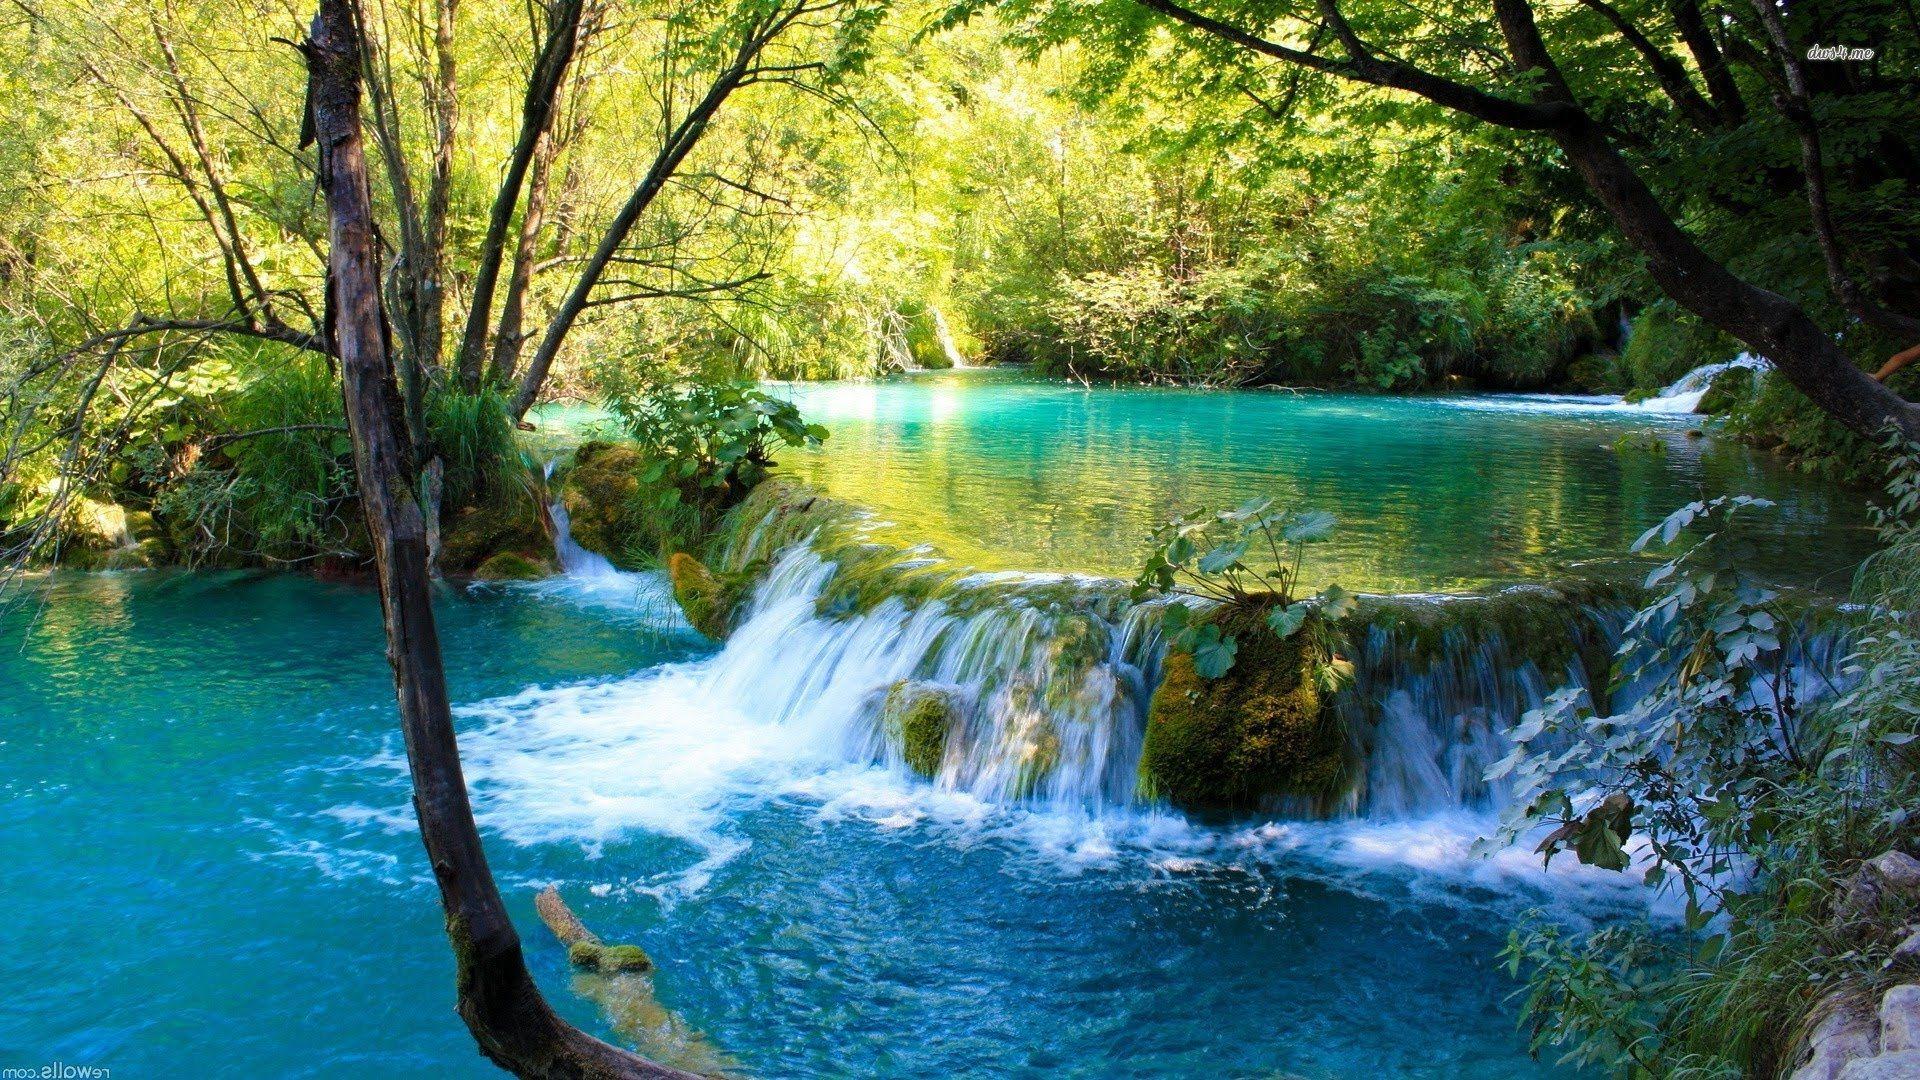 Beautiful Place To See- Plitvice Lake National Park, Croatia